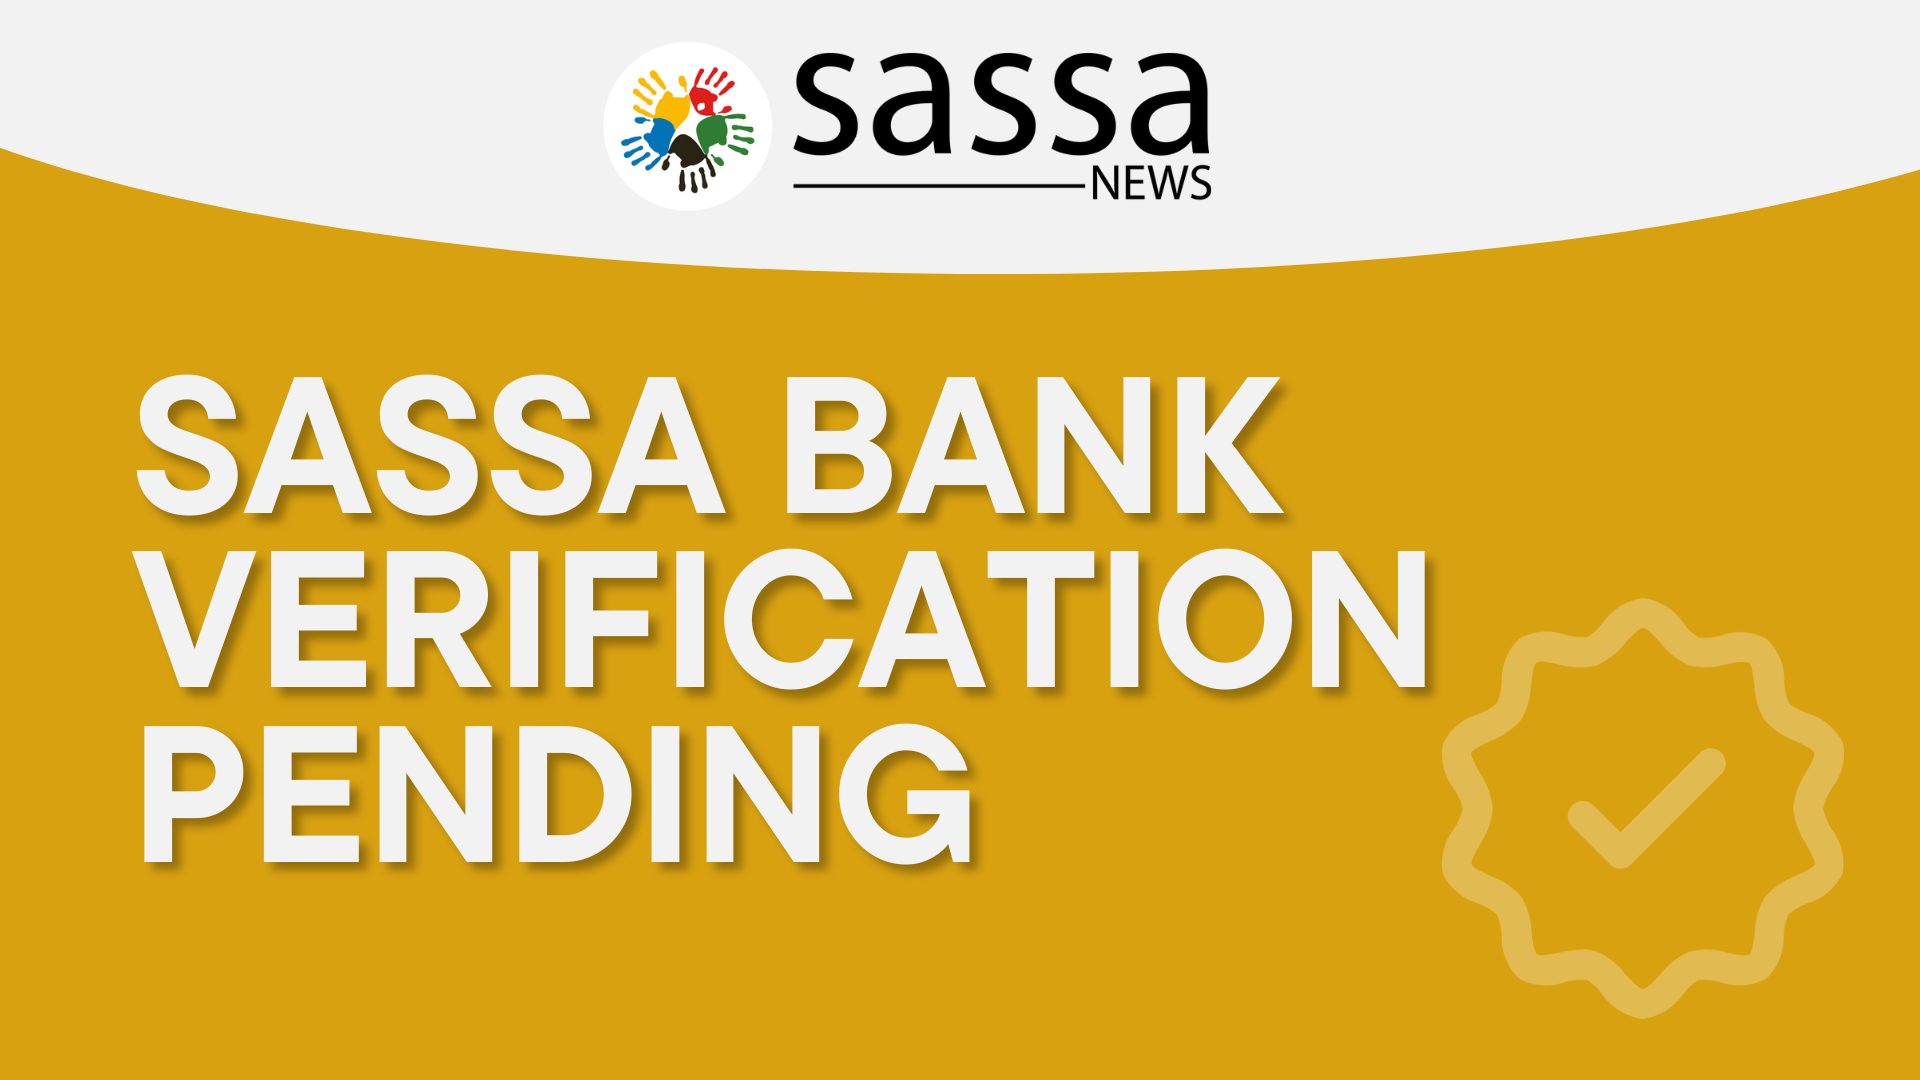 Sassa Bank Verification Pending